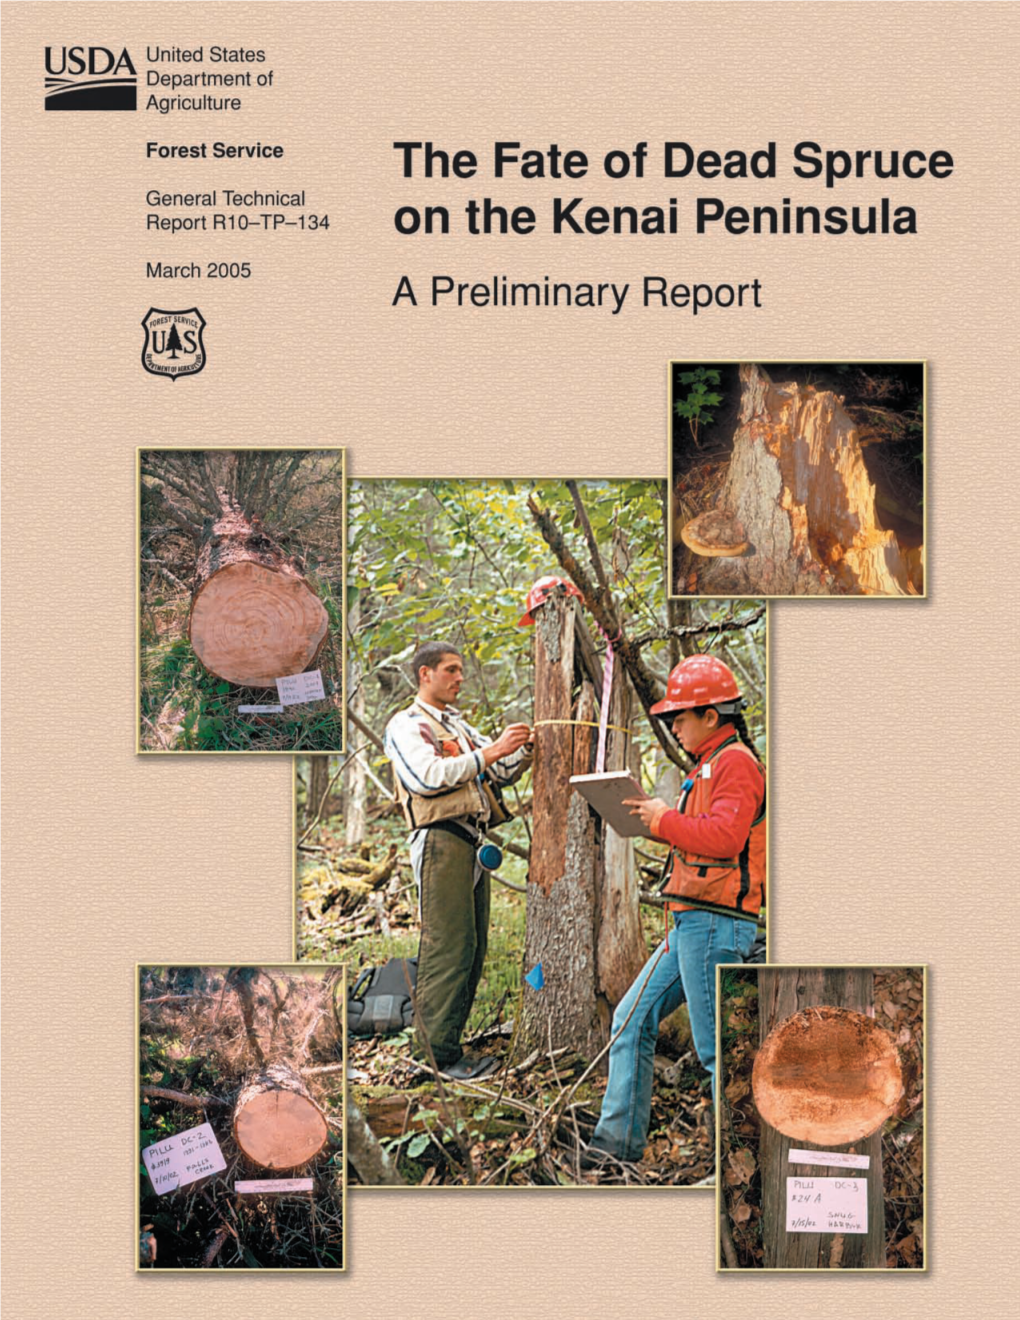 The Fate of Dead Spruce on the Kenai Peninsula a Preliminary Report